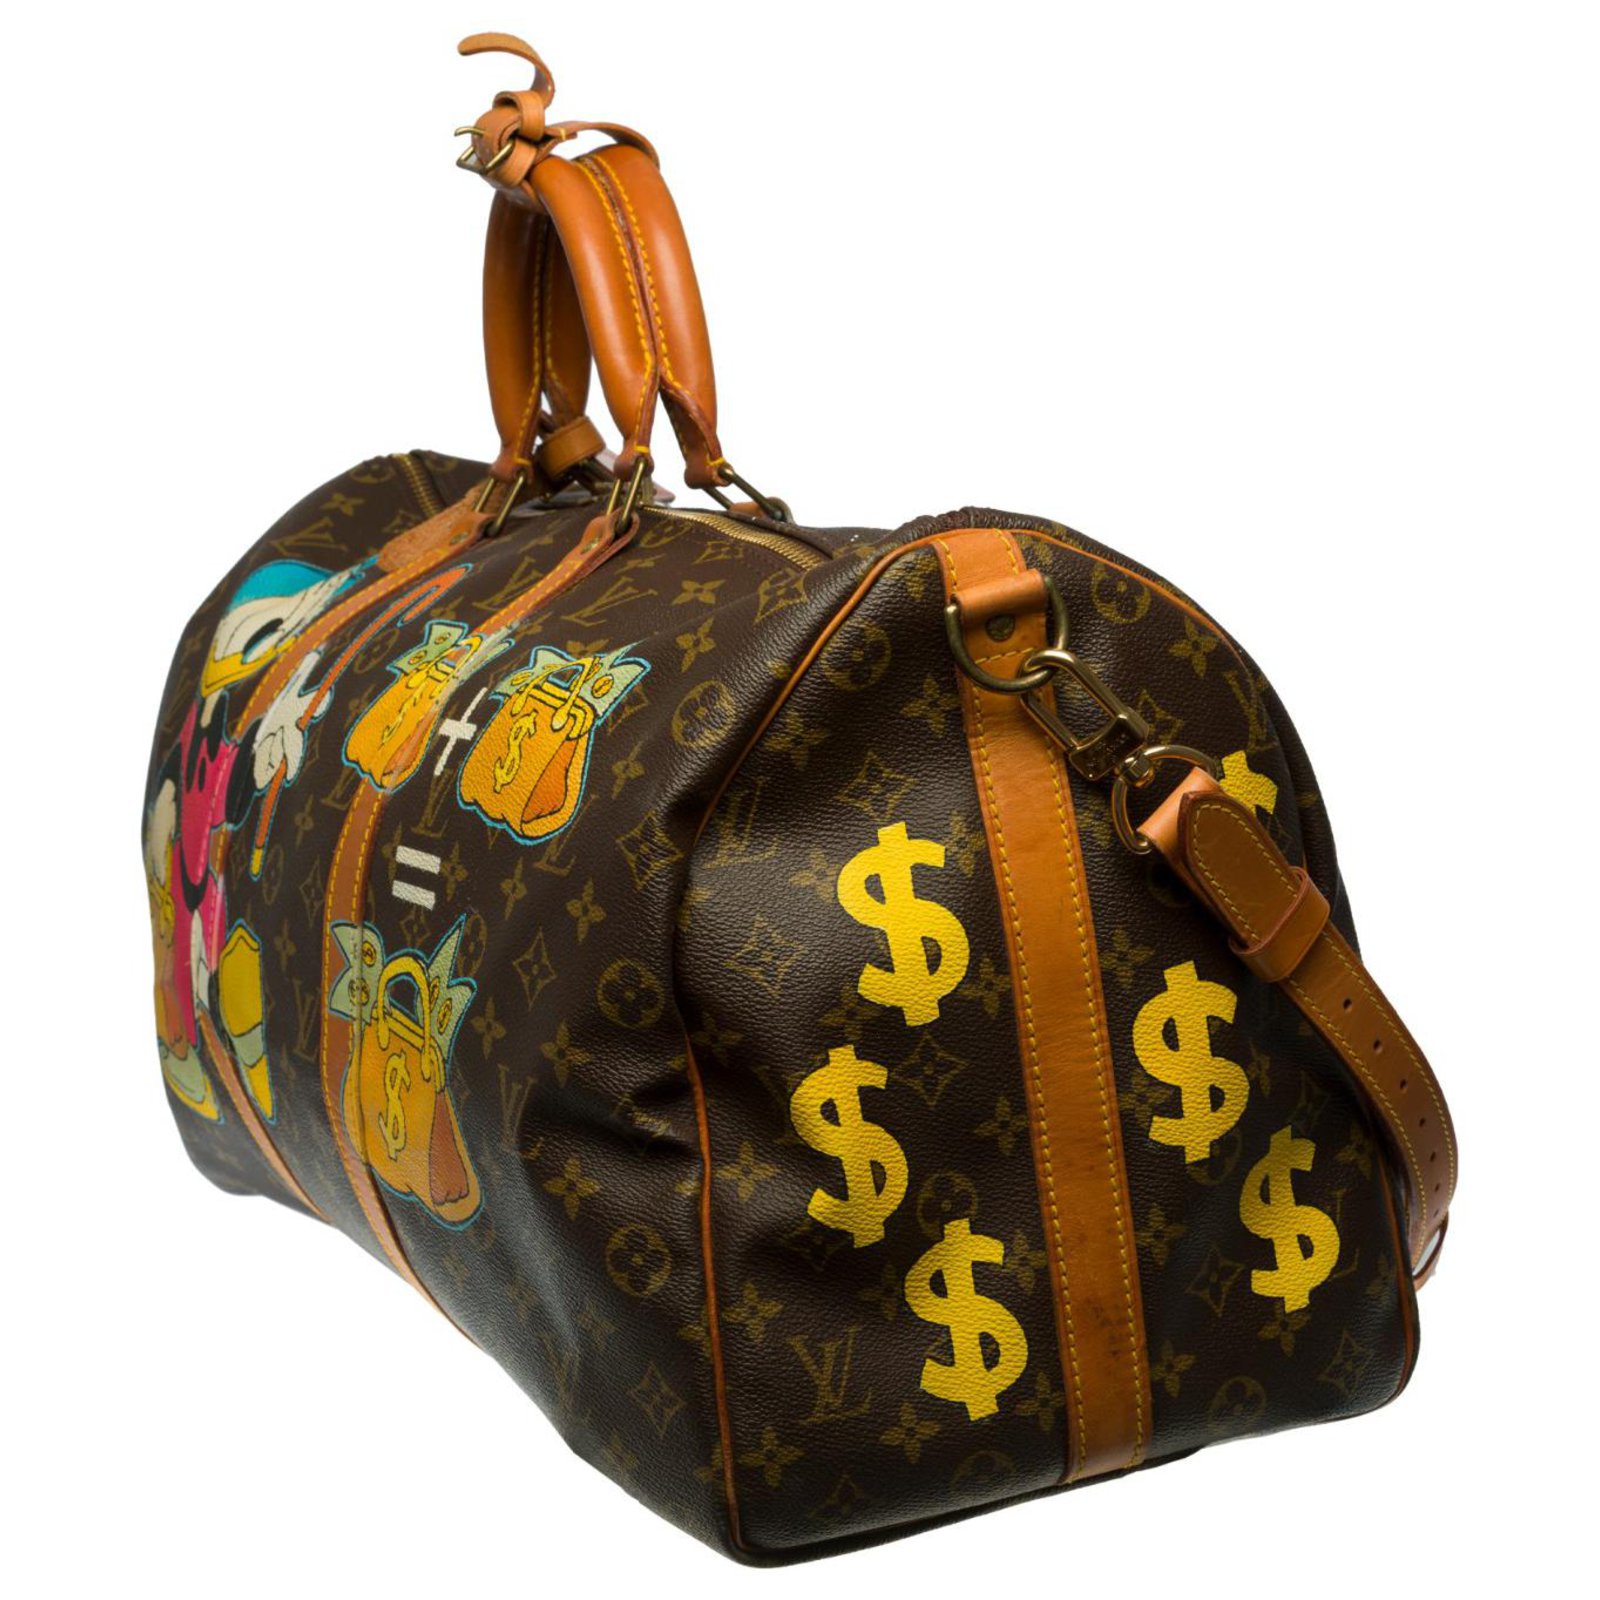 Beautiful Louis Vuitton Keepall travel bag 50 cm shoulder strap in